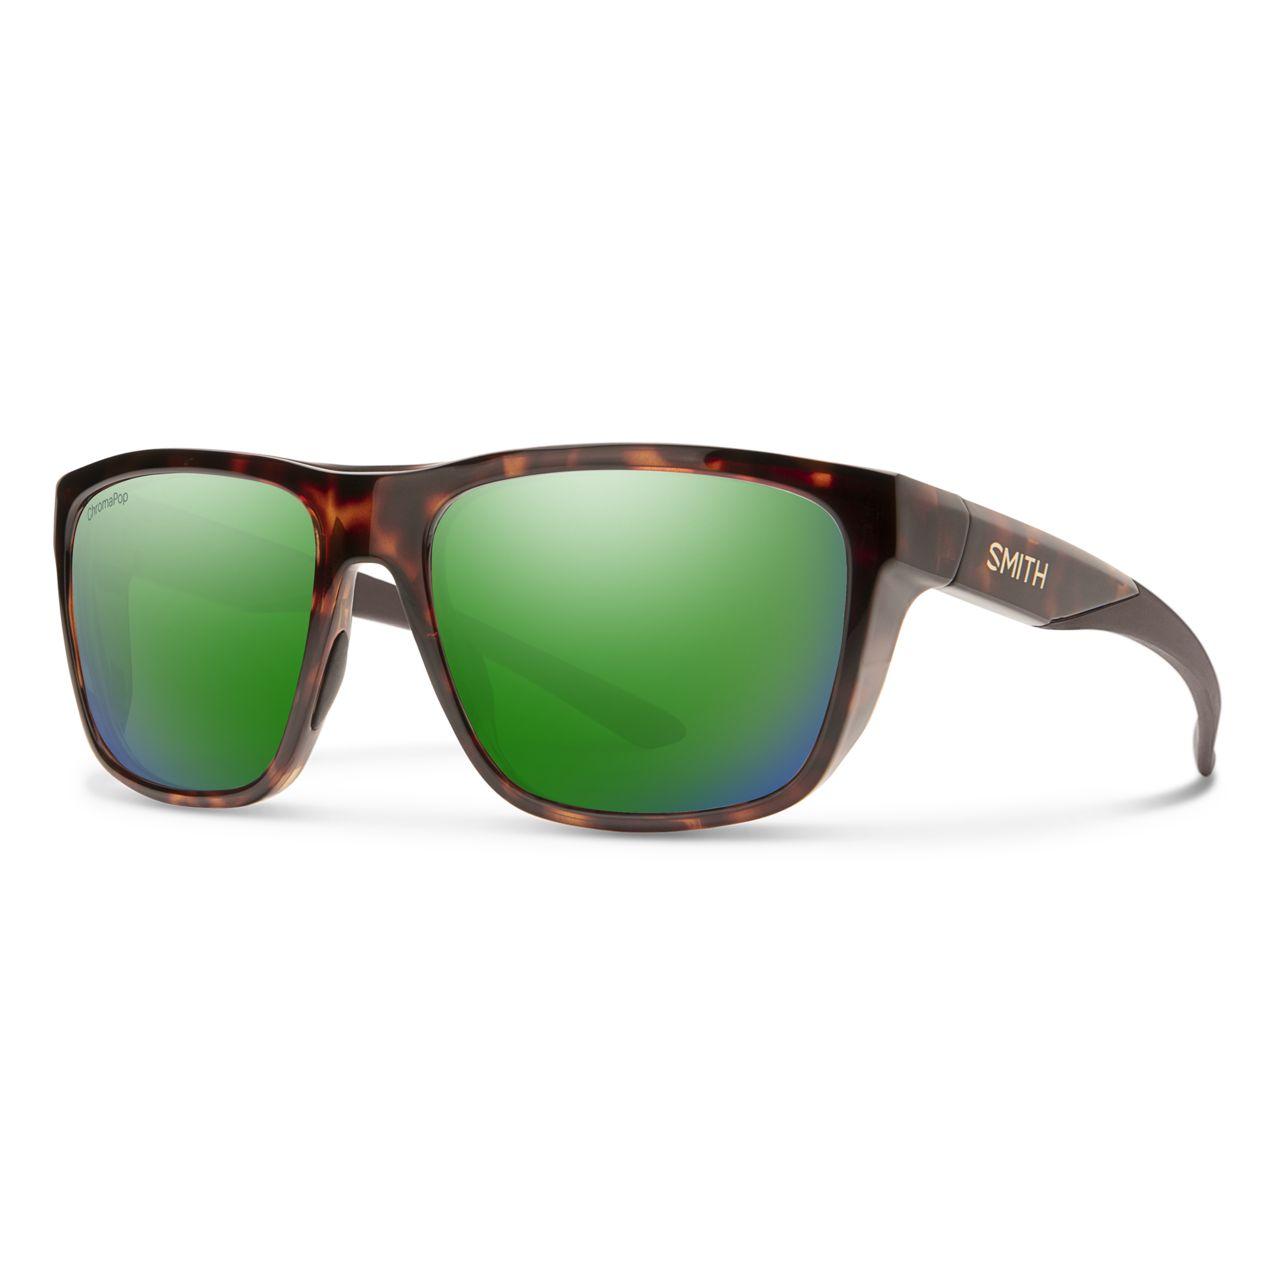 Smith Optics Sport & Performance 205223 Barra Sunglasses